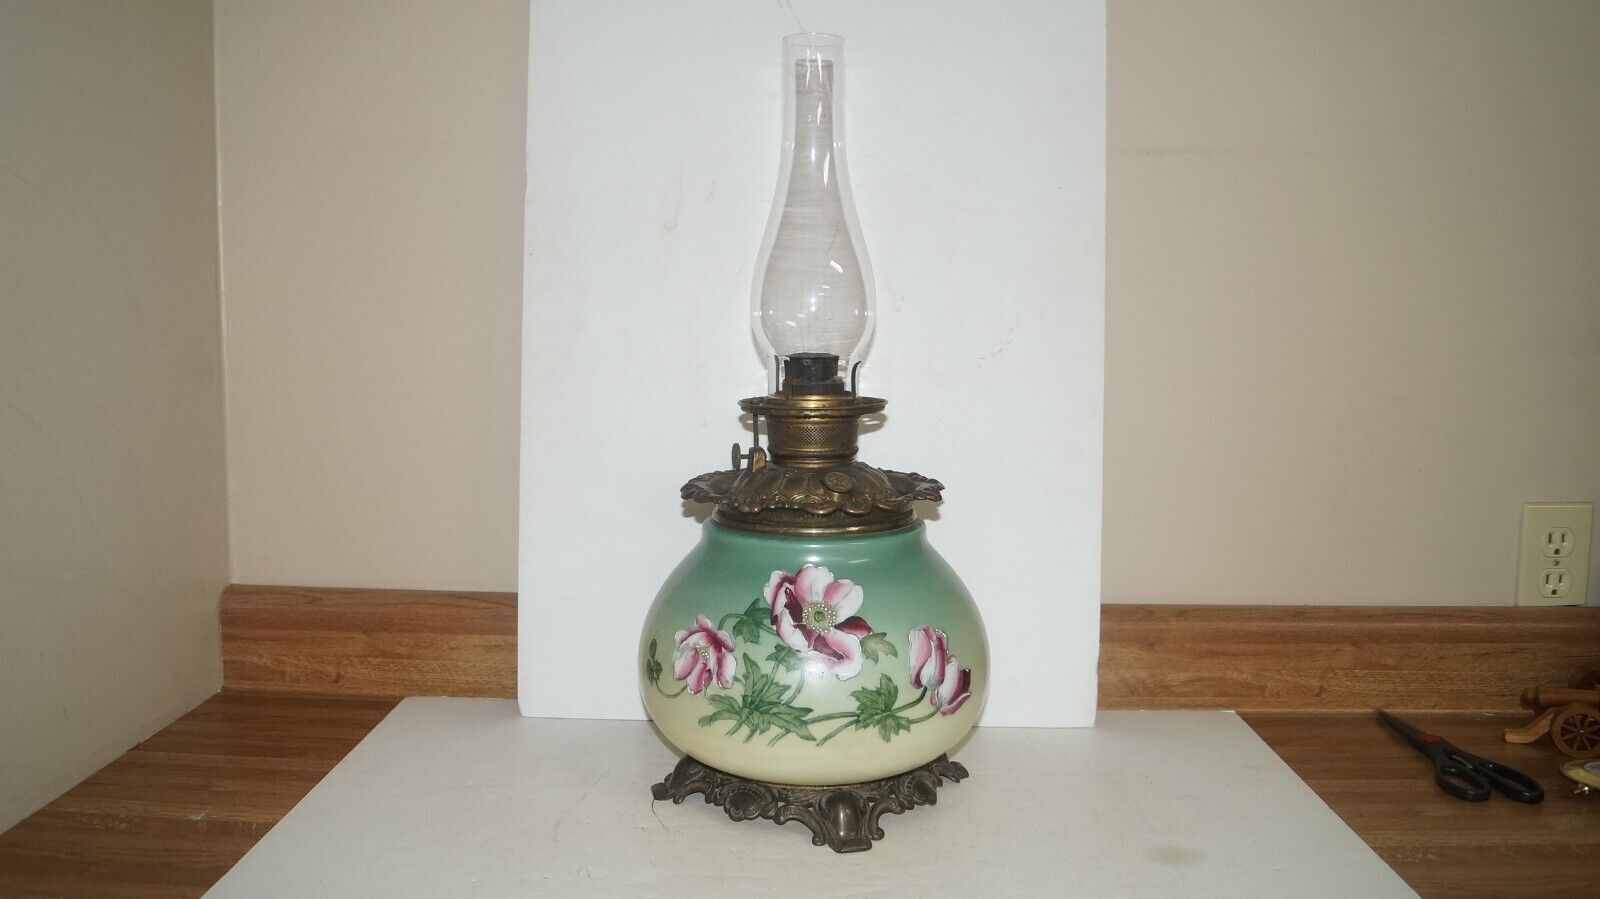 BEAUTIFUL Vintage Hand Painted Floral Hurricane Kerosene Table Lamp - NICE